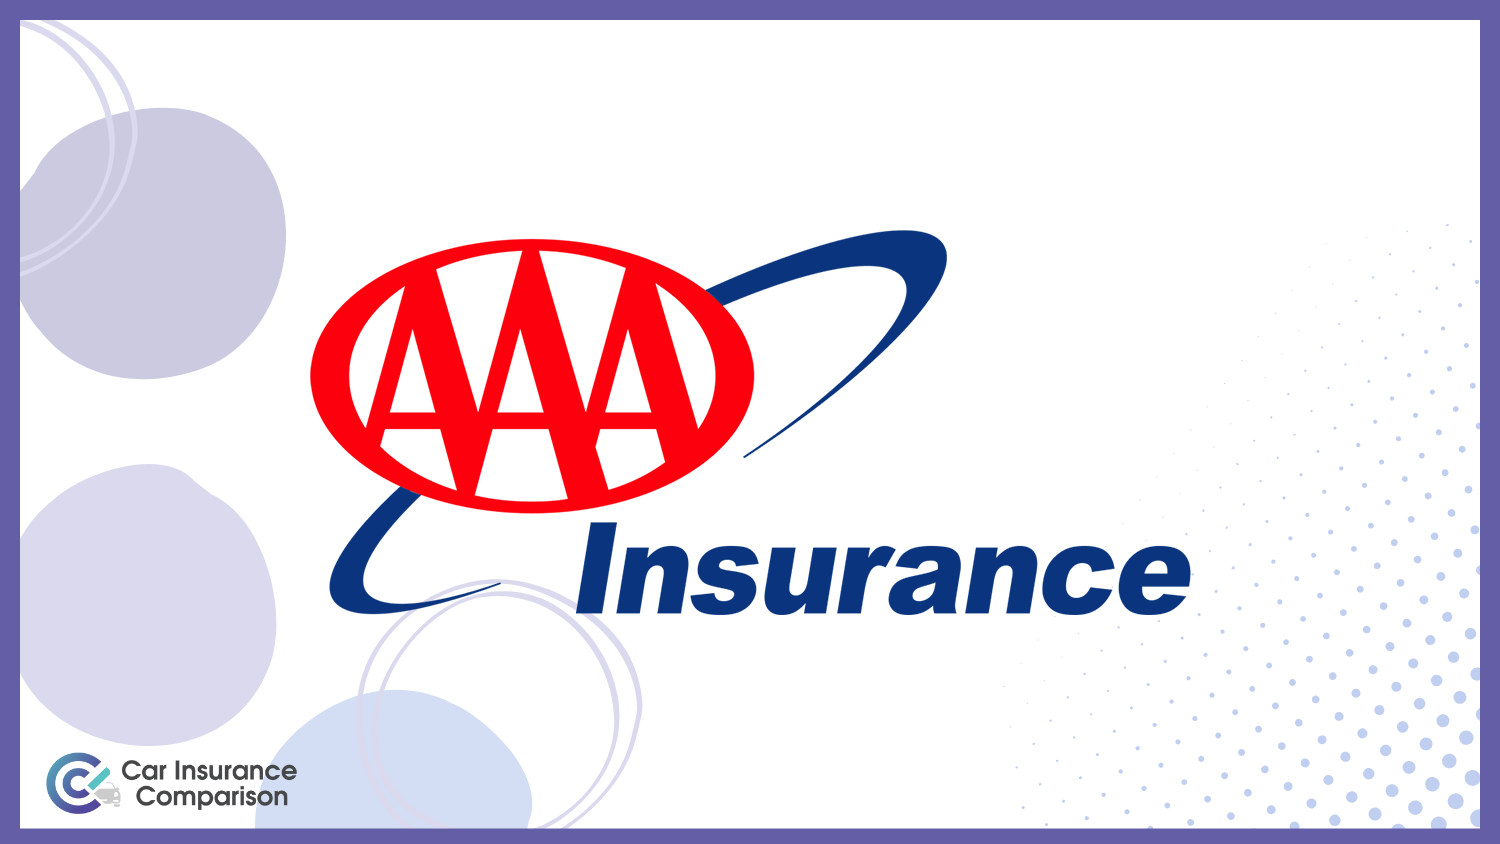 AAA: Best Car Insurance for Diplomats